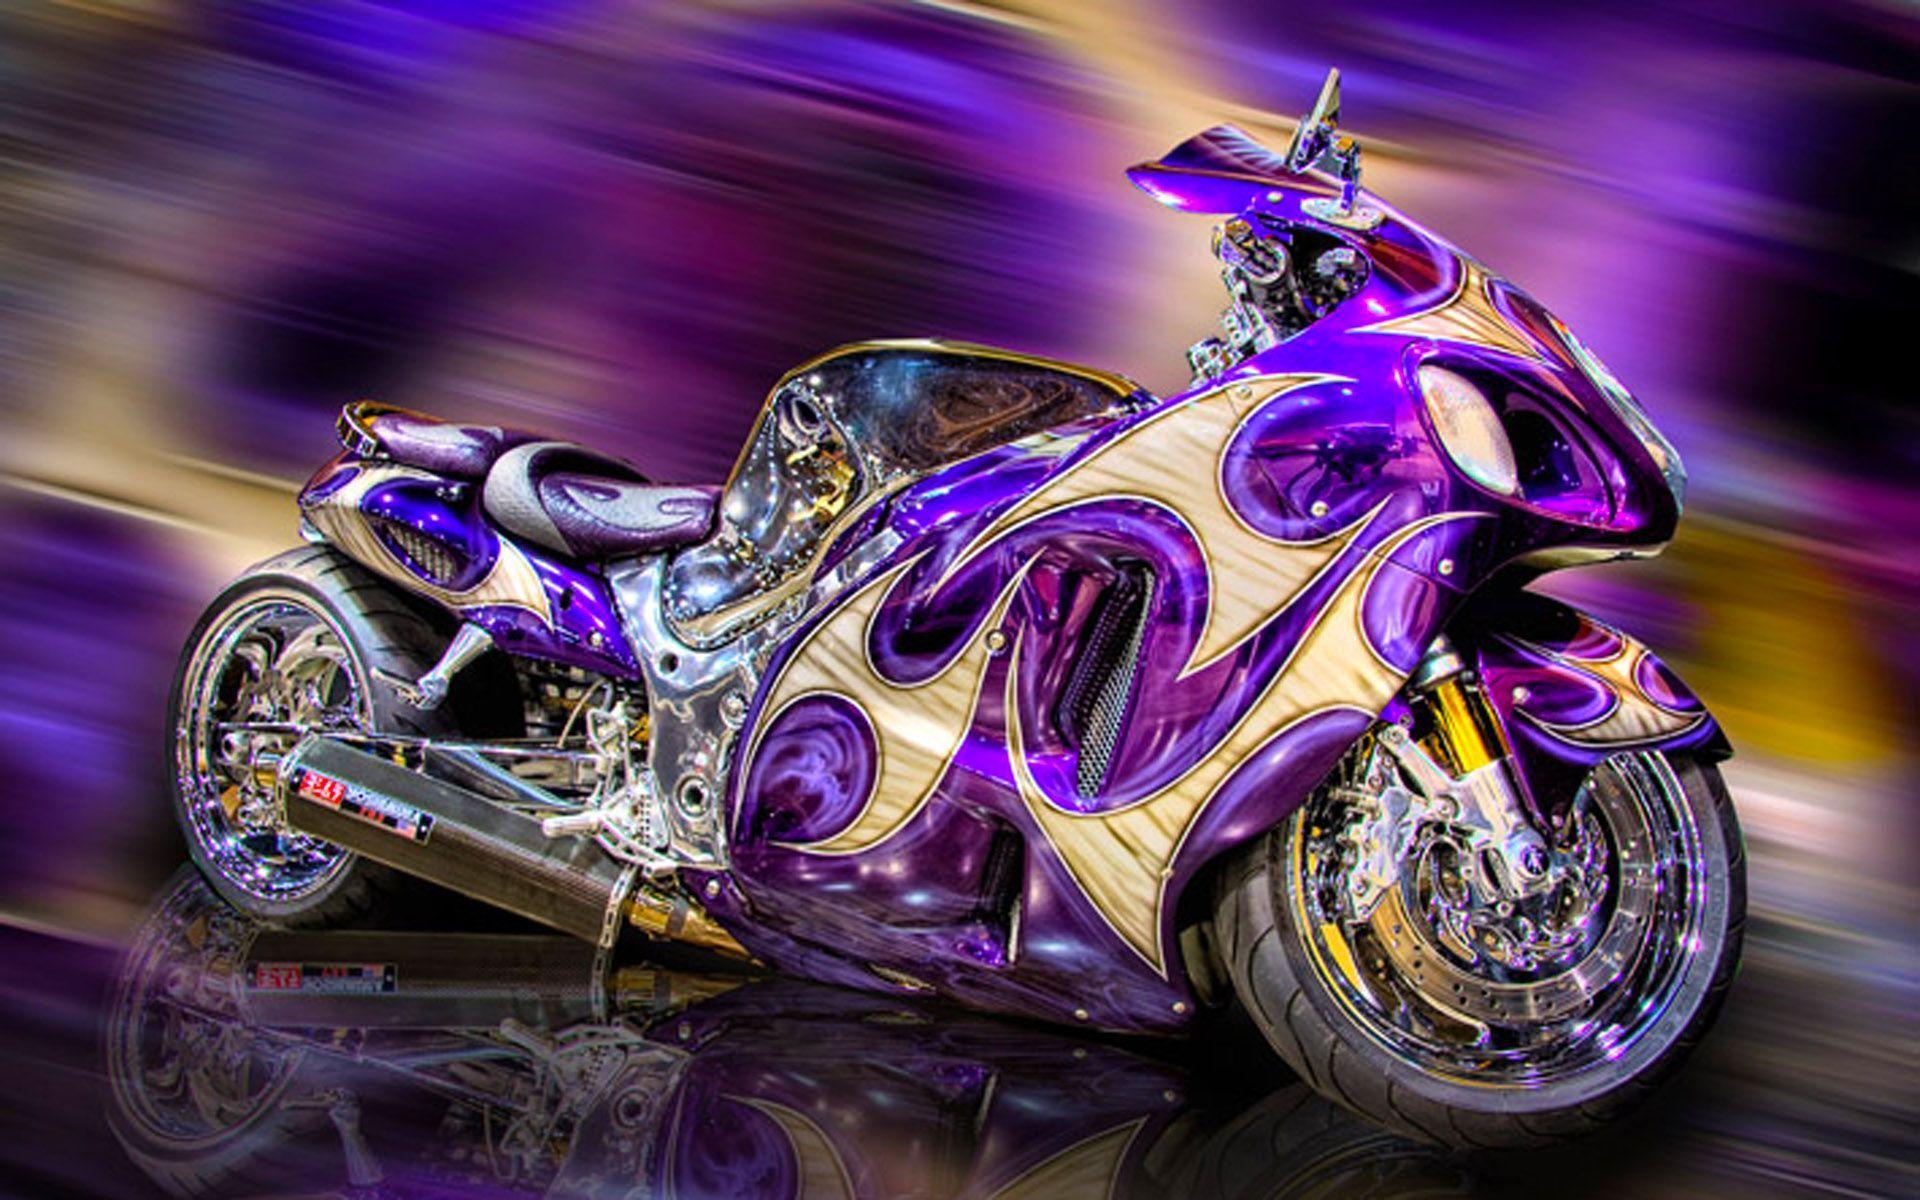 Chopper Bikes Motorcycle Full HD Wallpaper. vergapipe